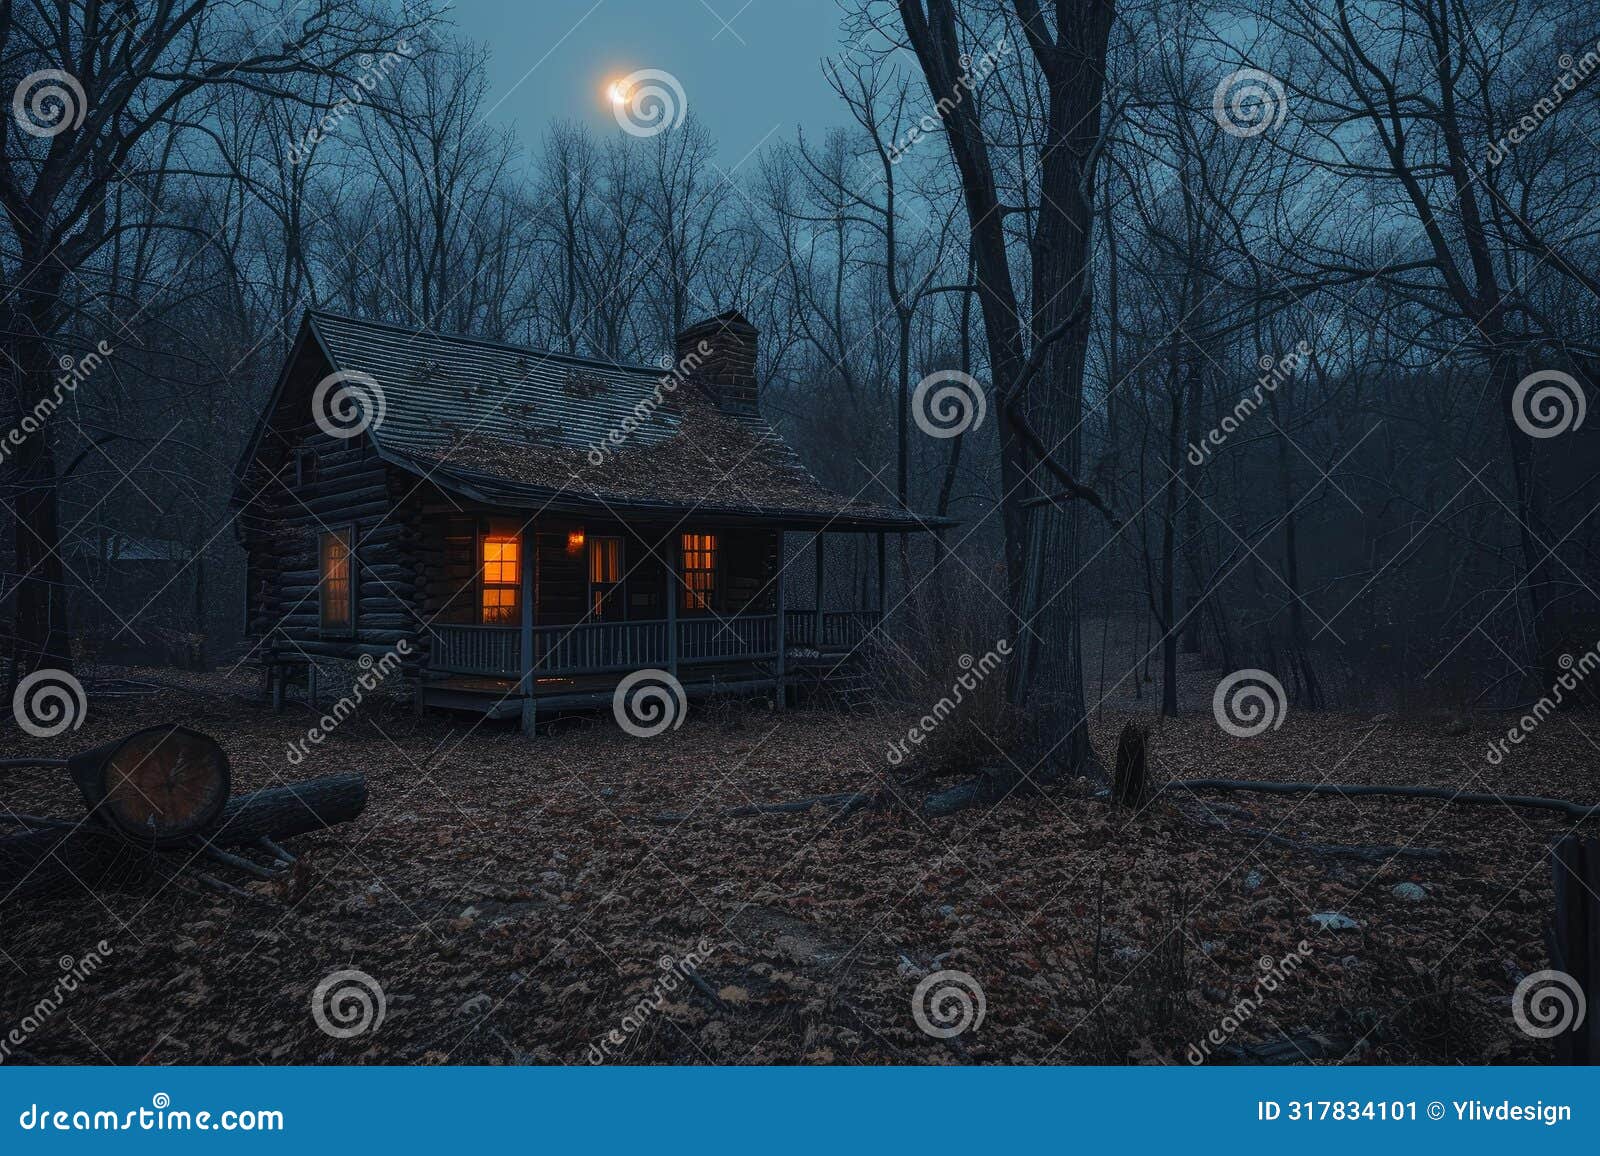 cozy cabin in moonlit forest